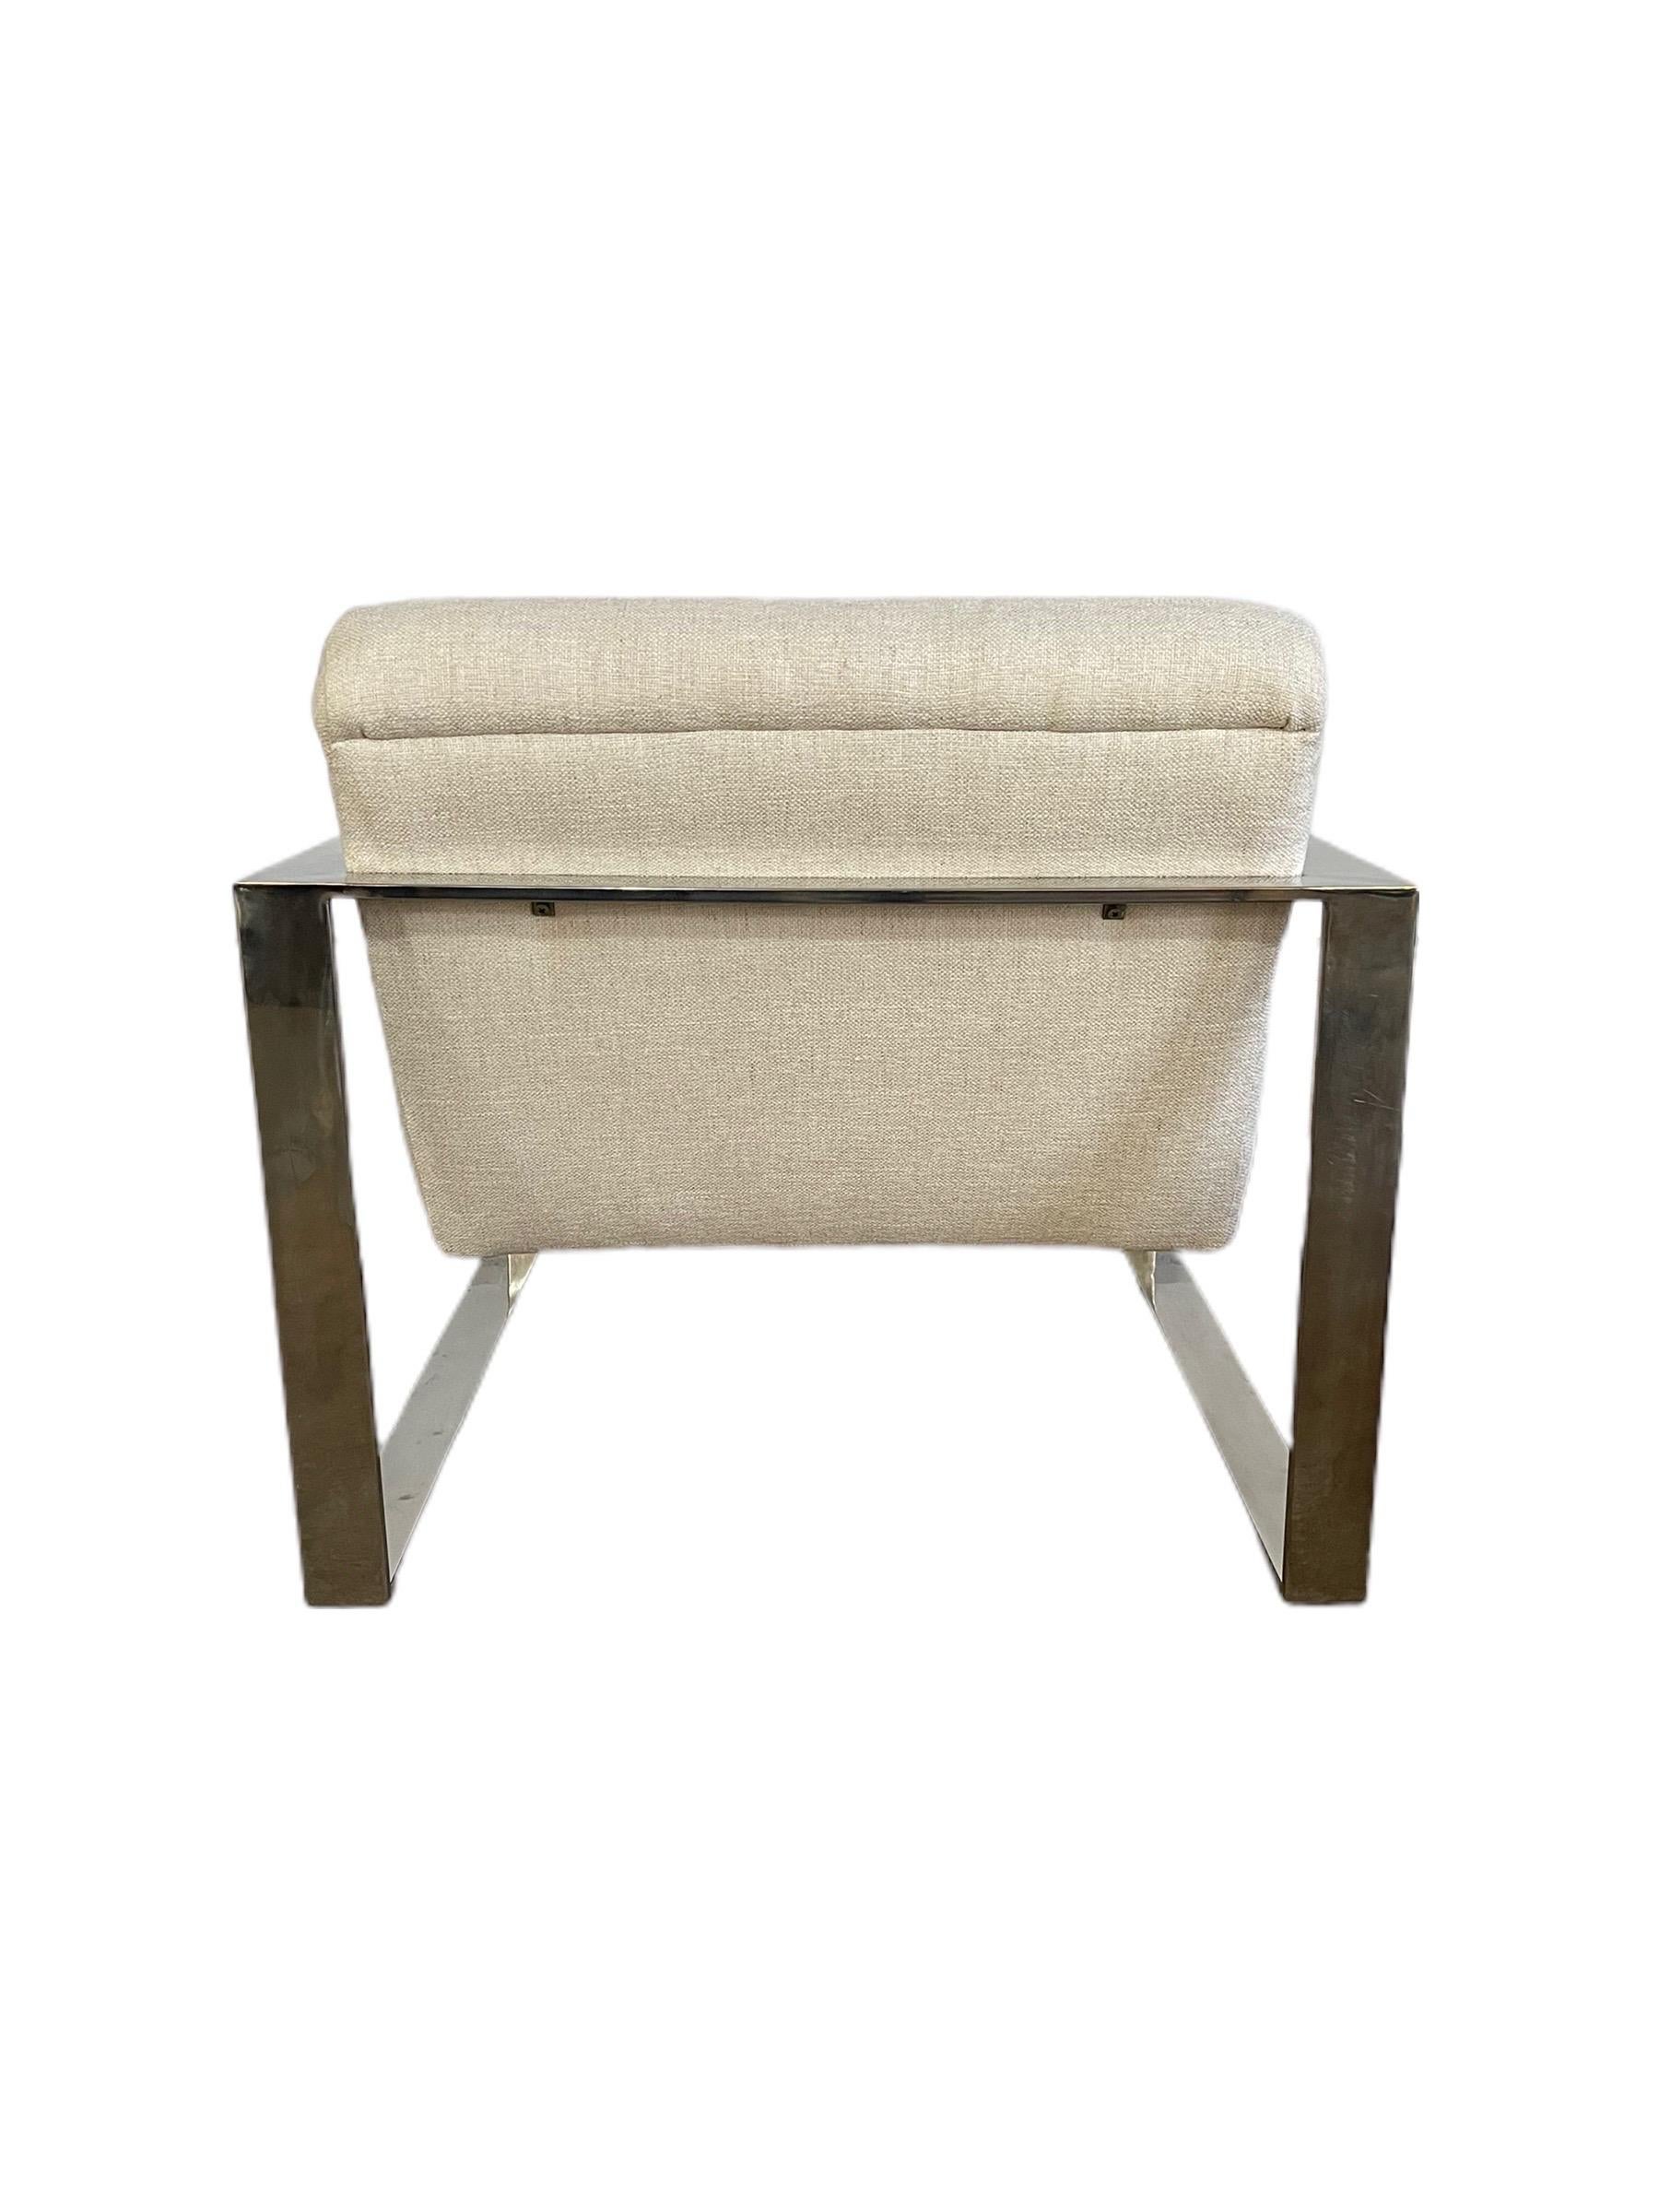  Milo Baughman Style Chrome Lounge Chair & Ottoman  5